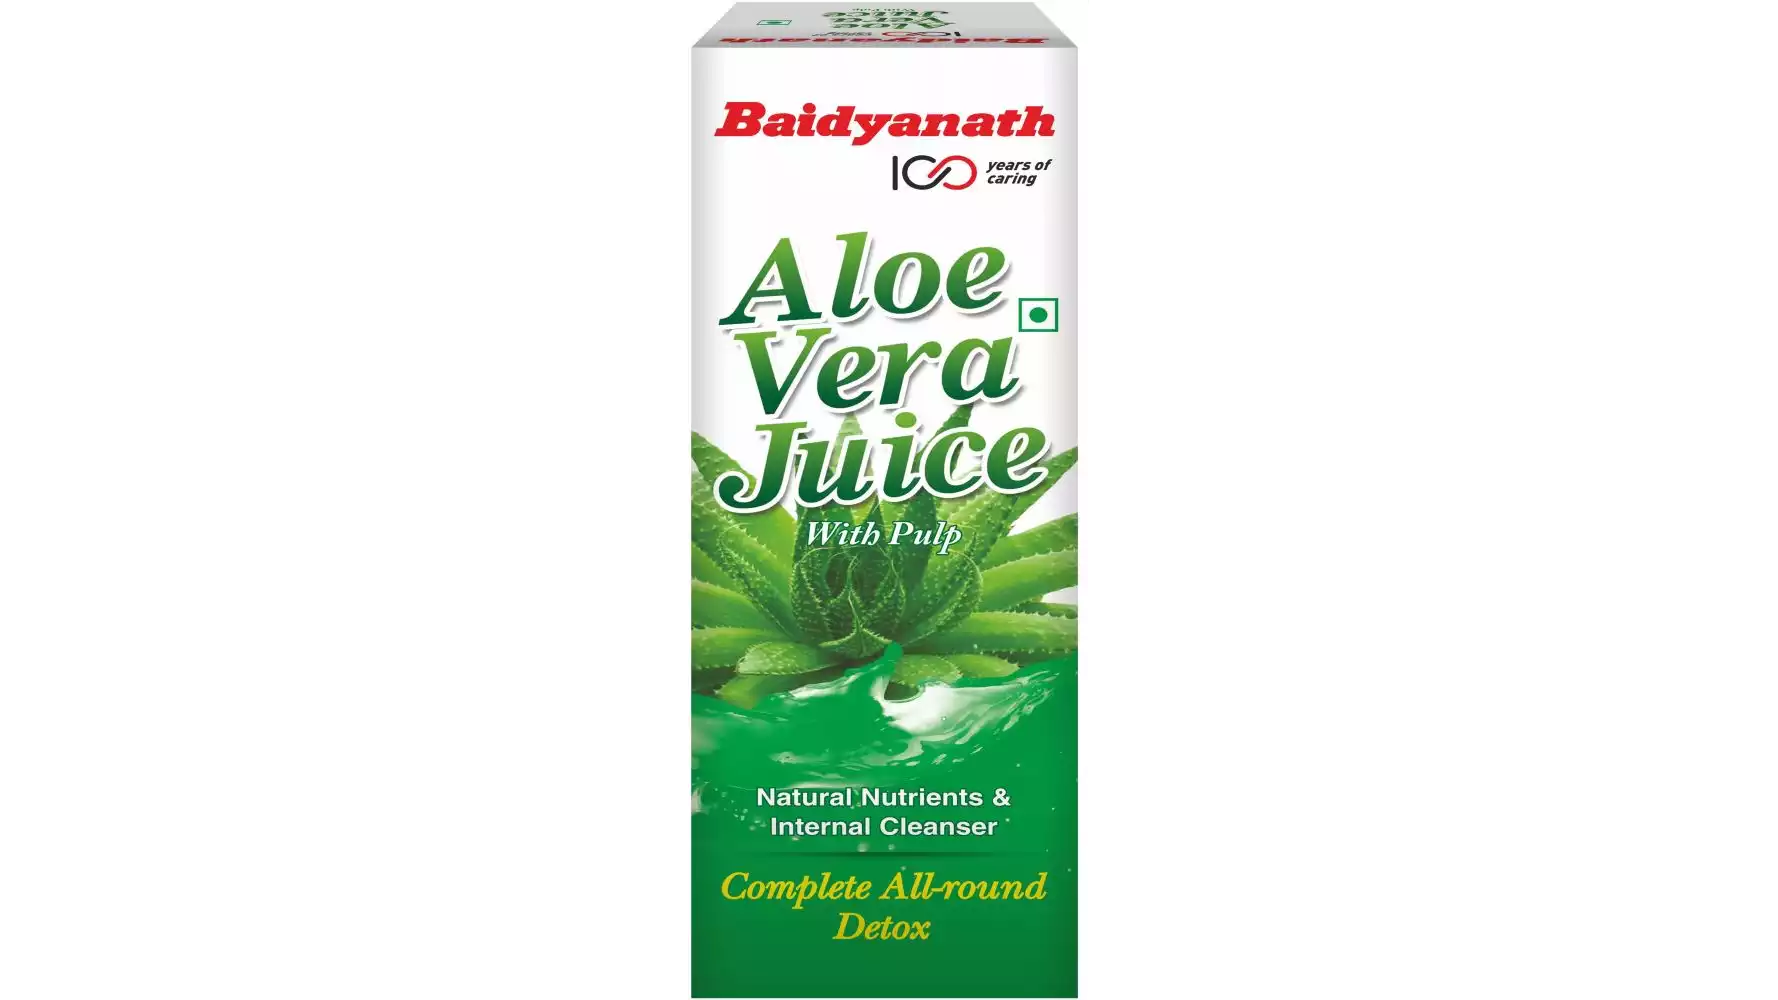 Baidyanath Ayurved Pure Aloe Vera Juice (1liter)